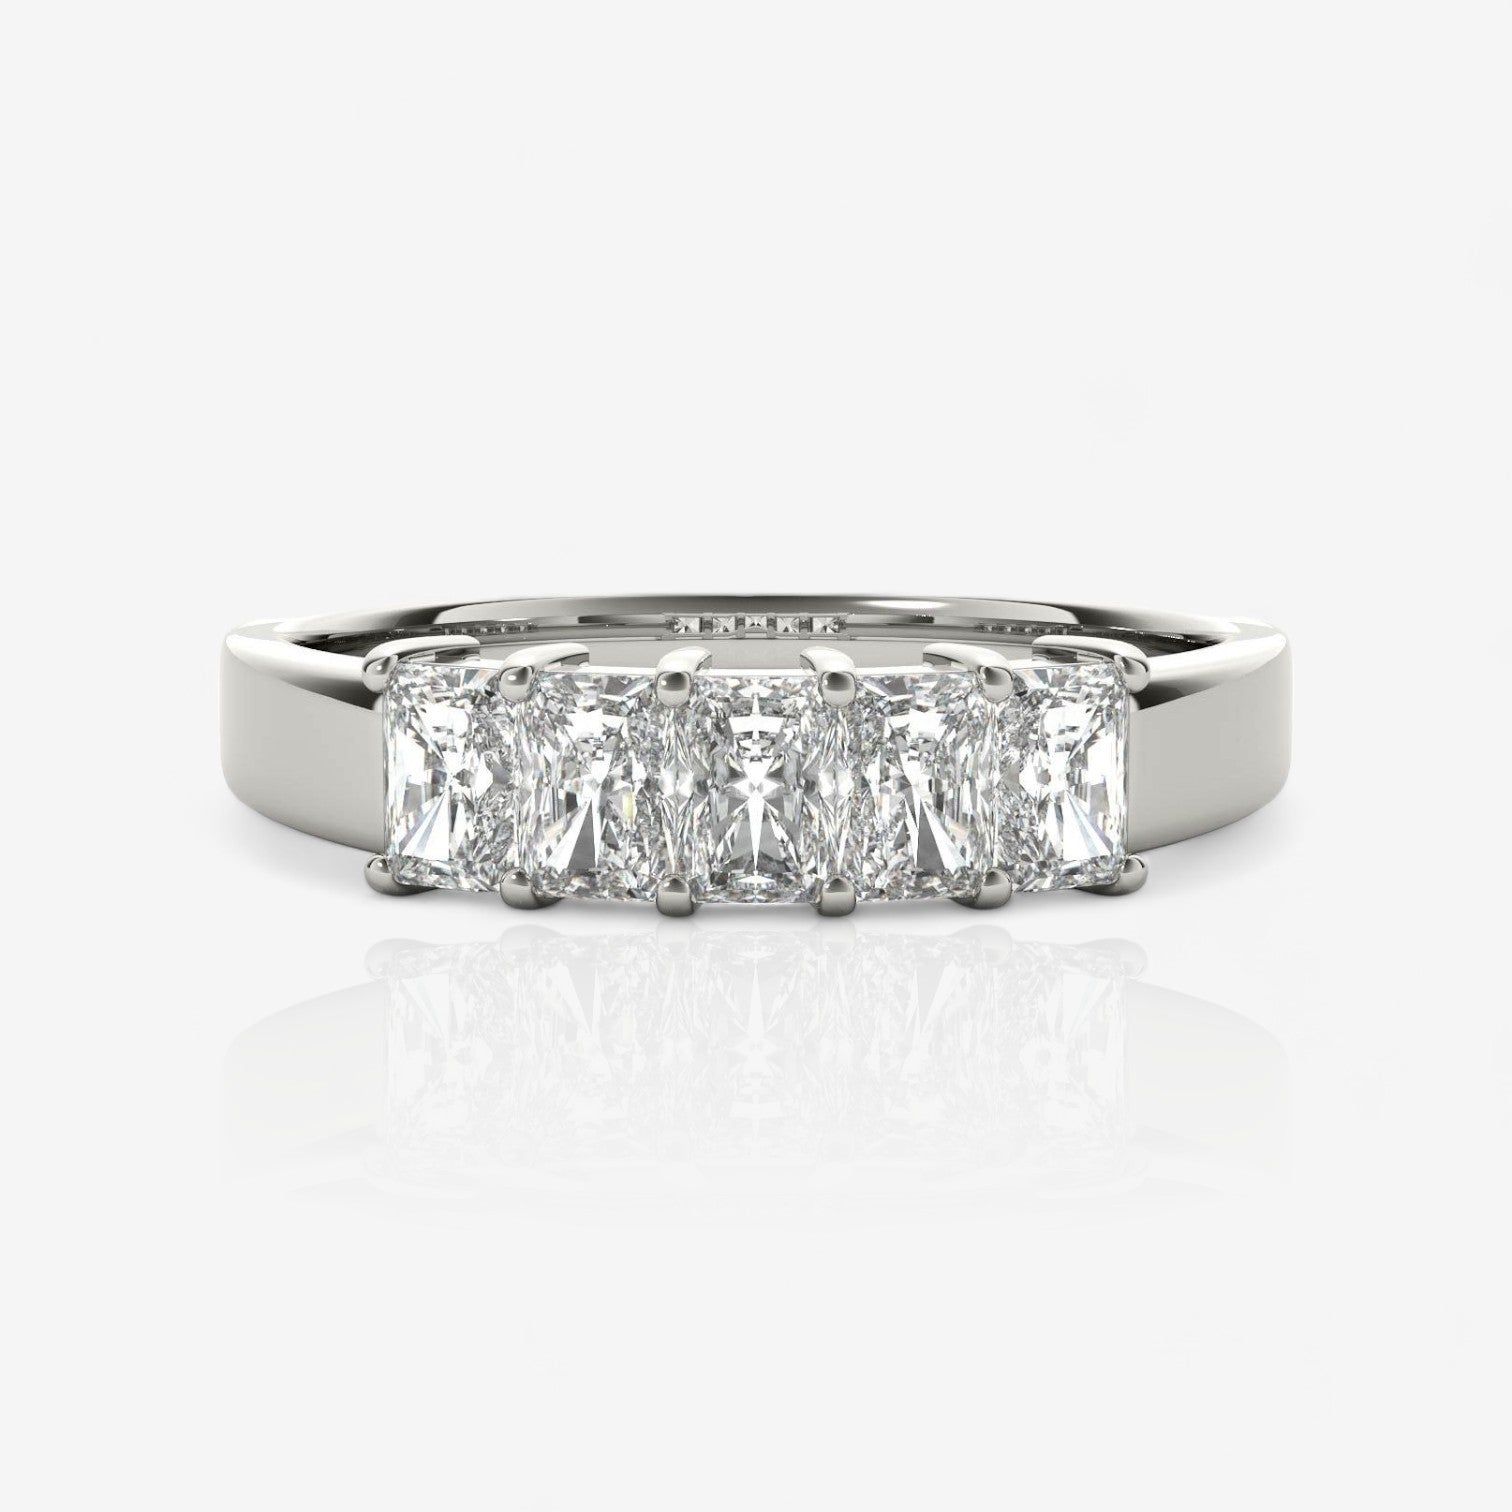 Five-Stone Radiant Cut Diamond Wedding Ring